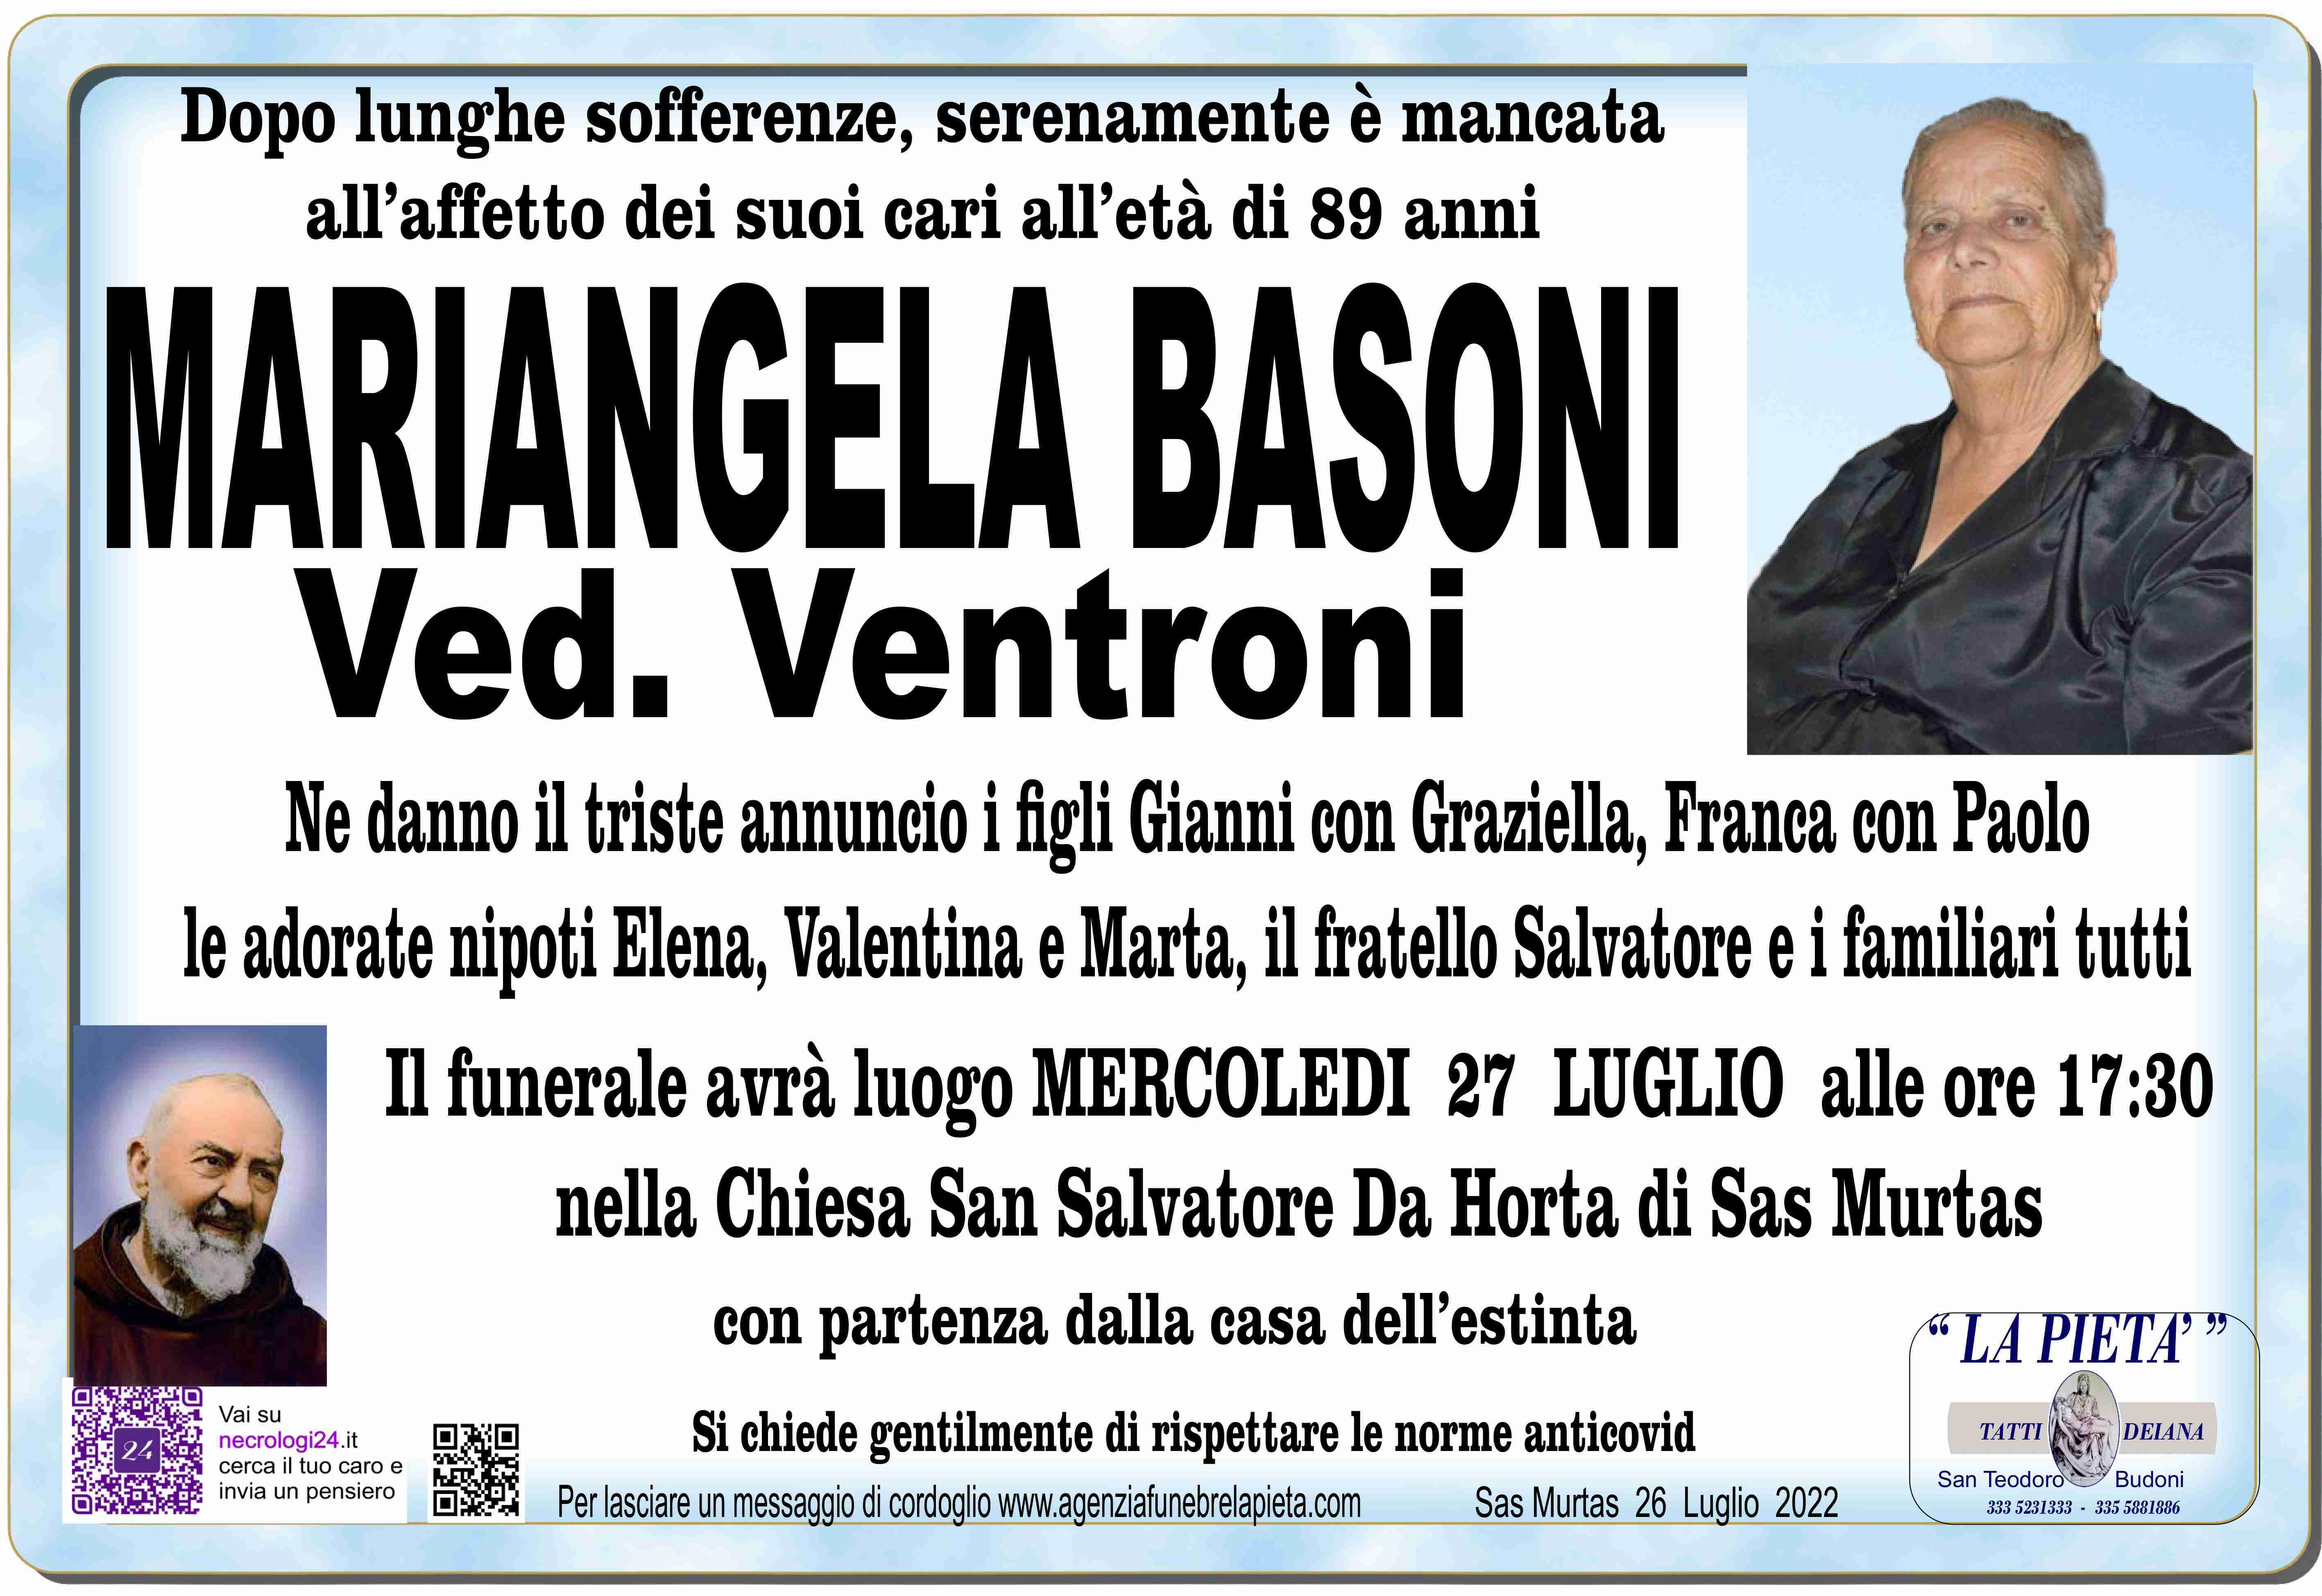 Mariangela Basoni